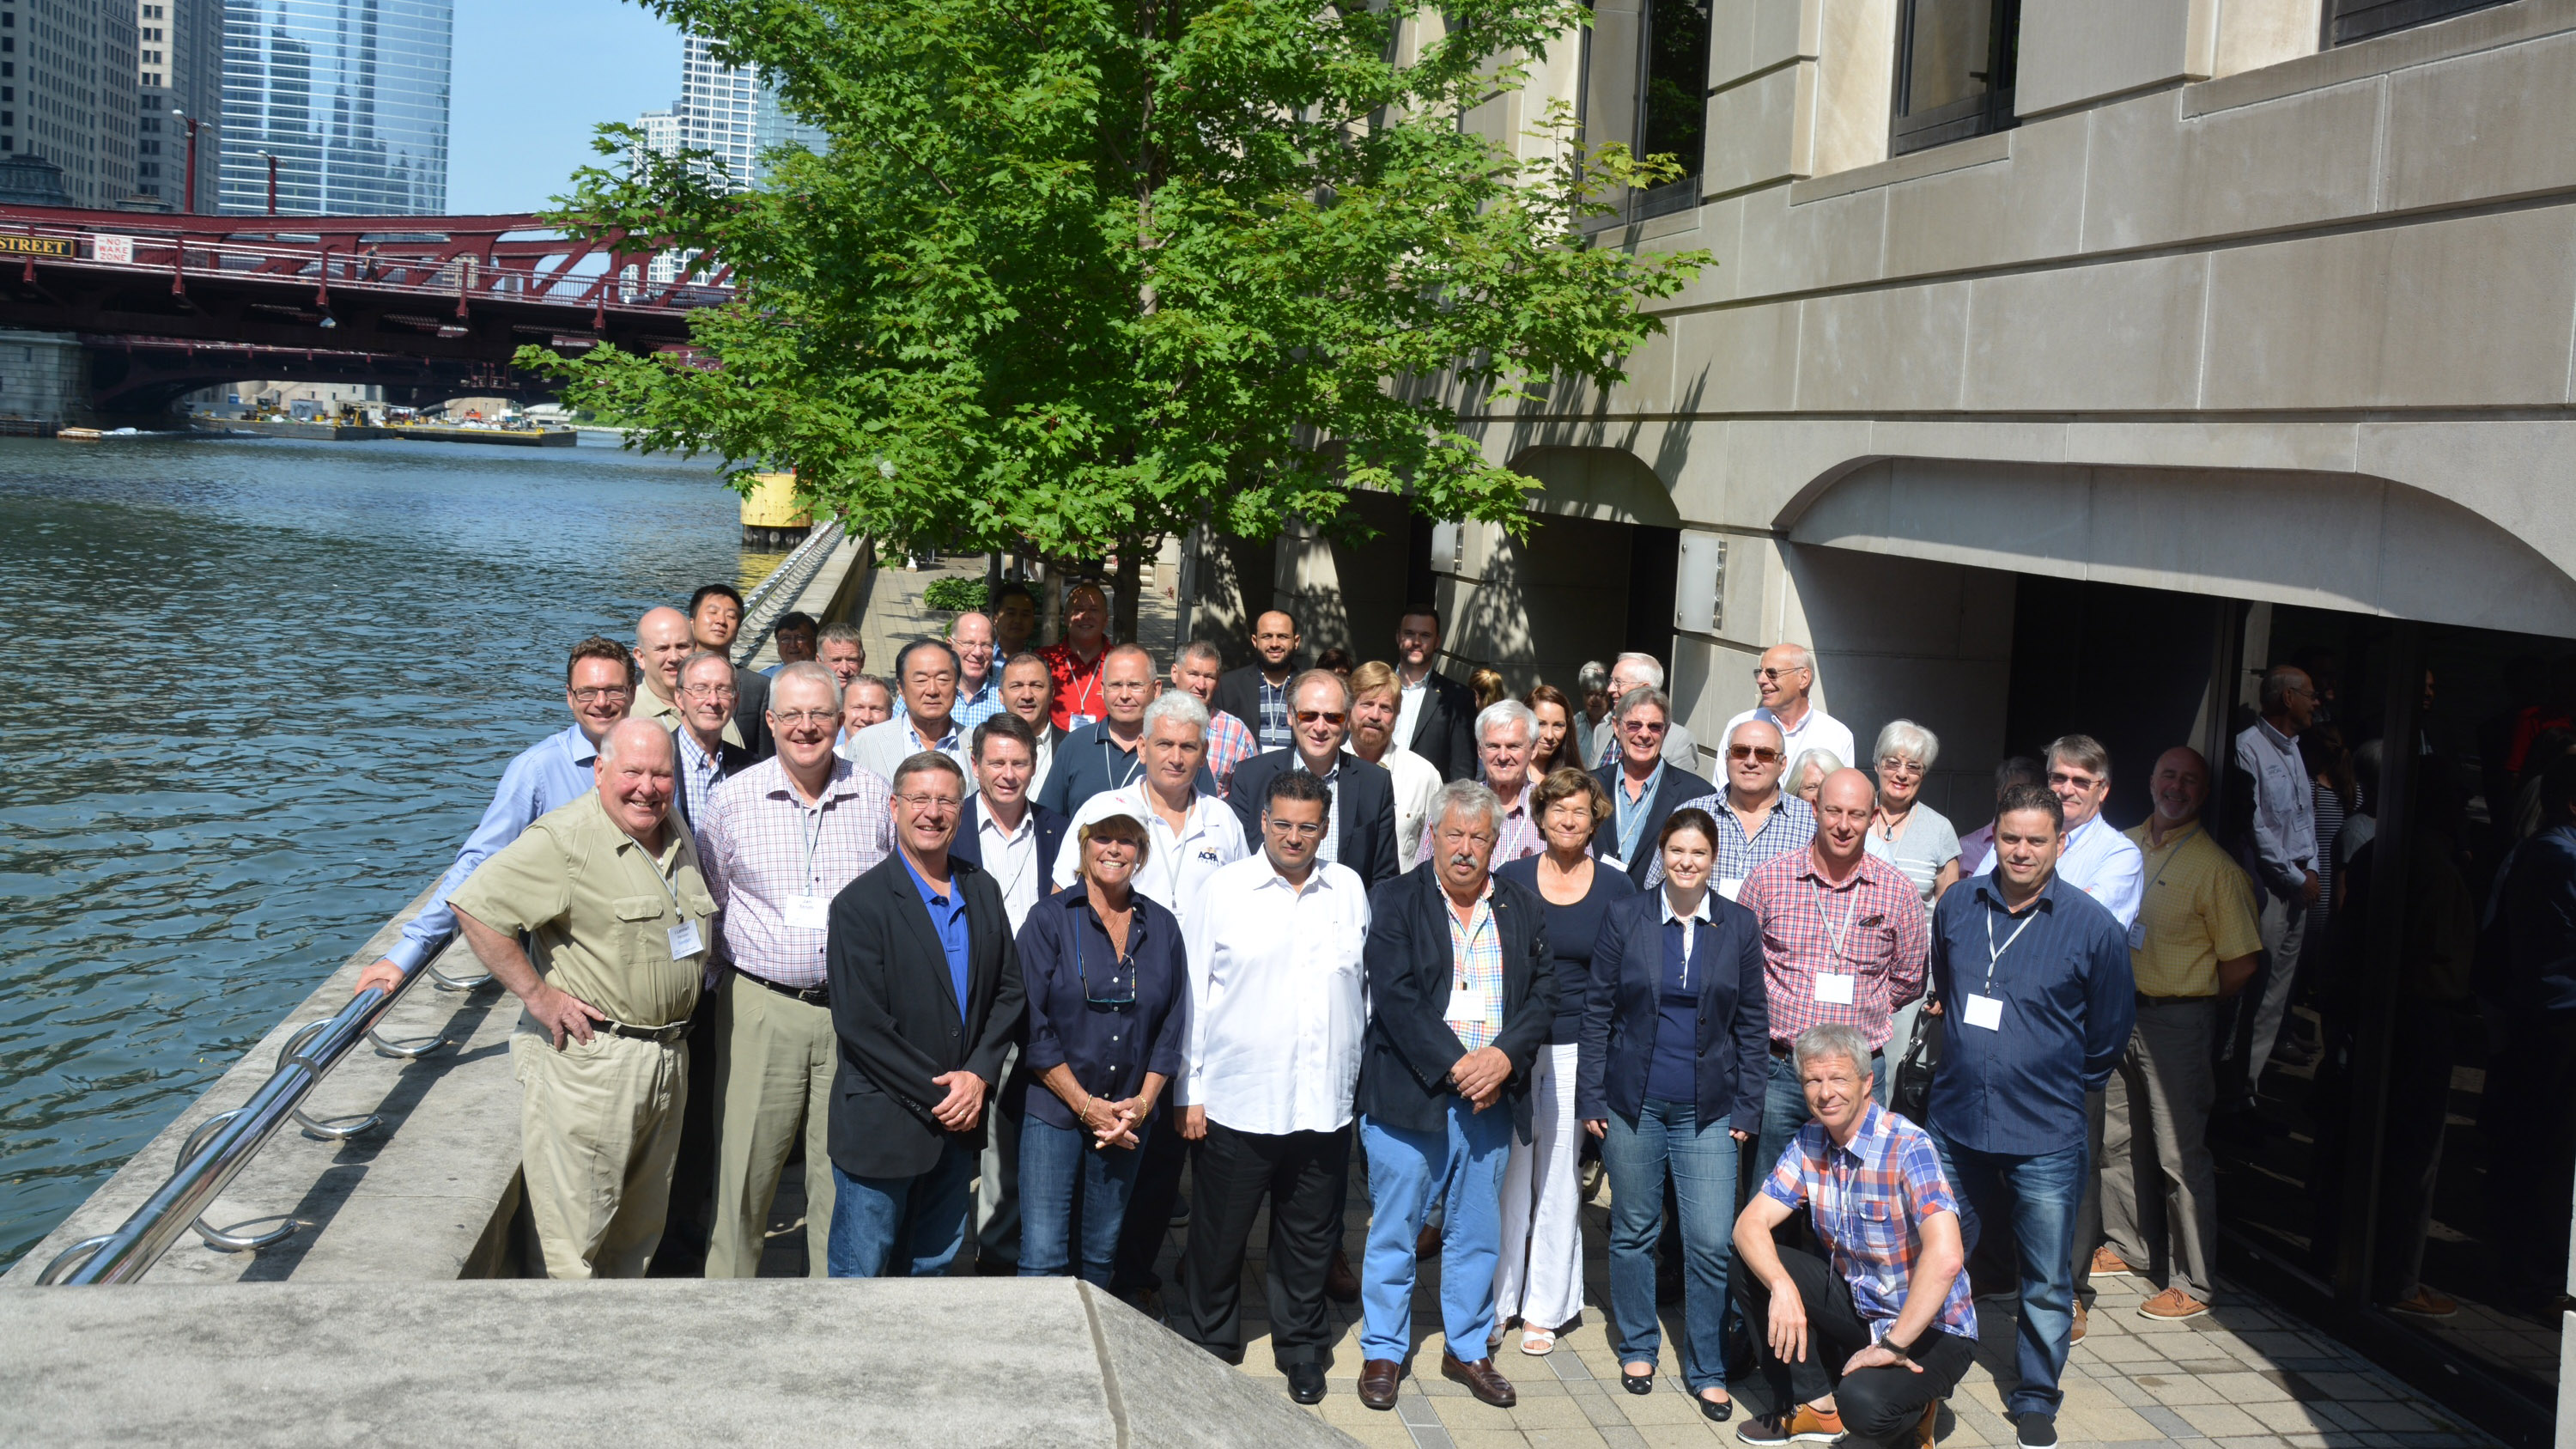 Twenty-eighth IAOPA World Assembly in Chicago